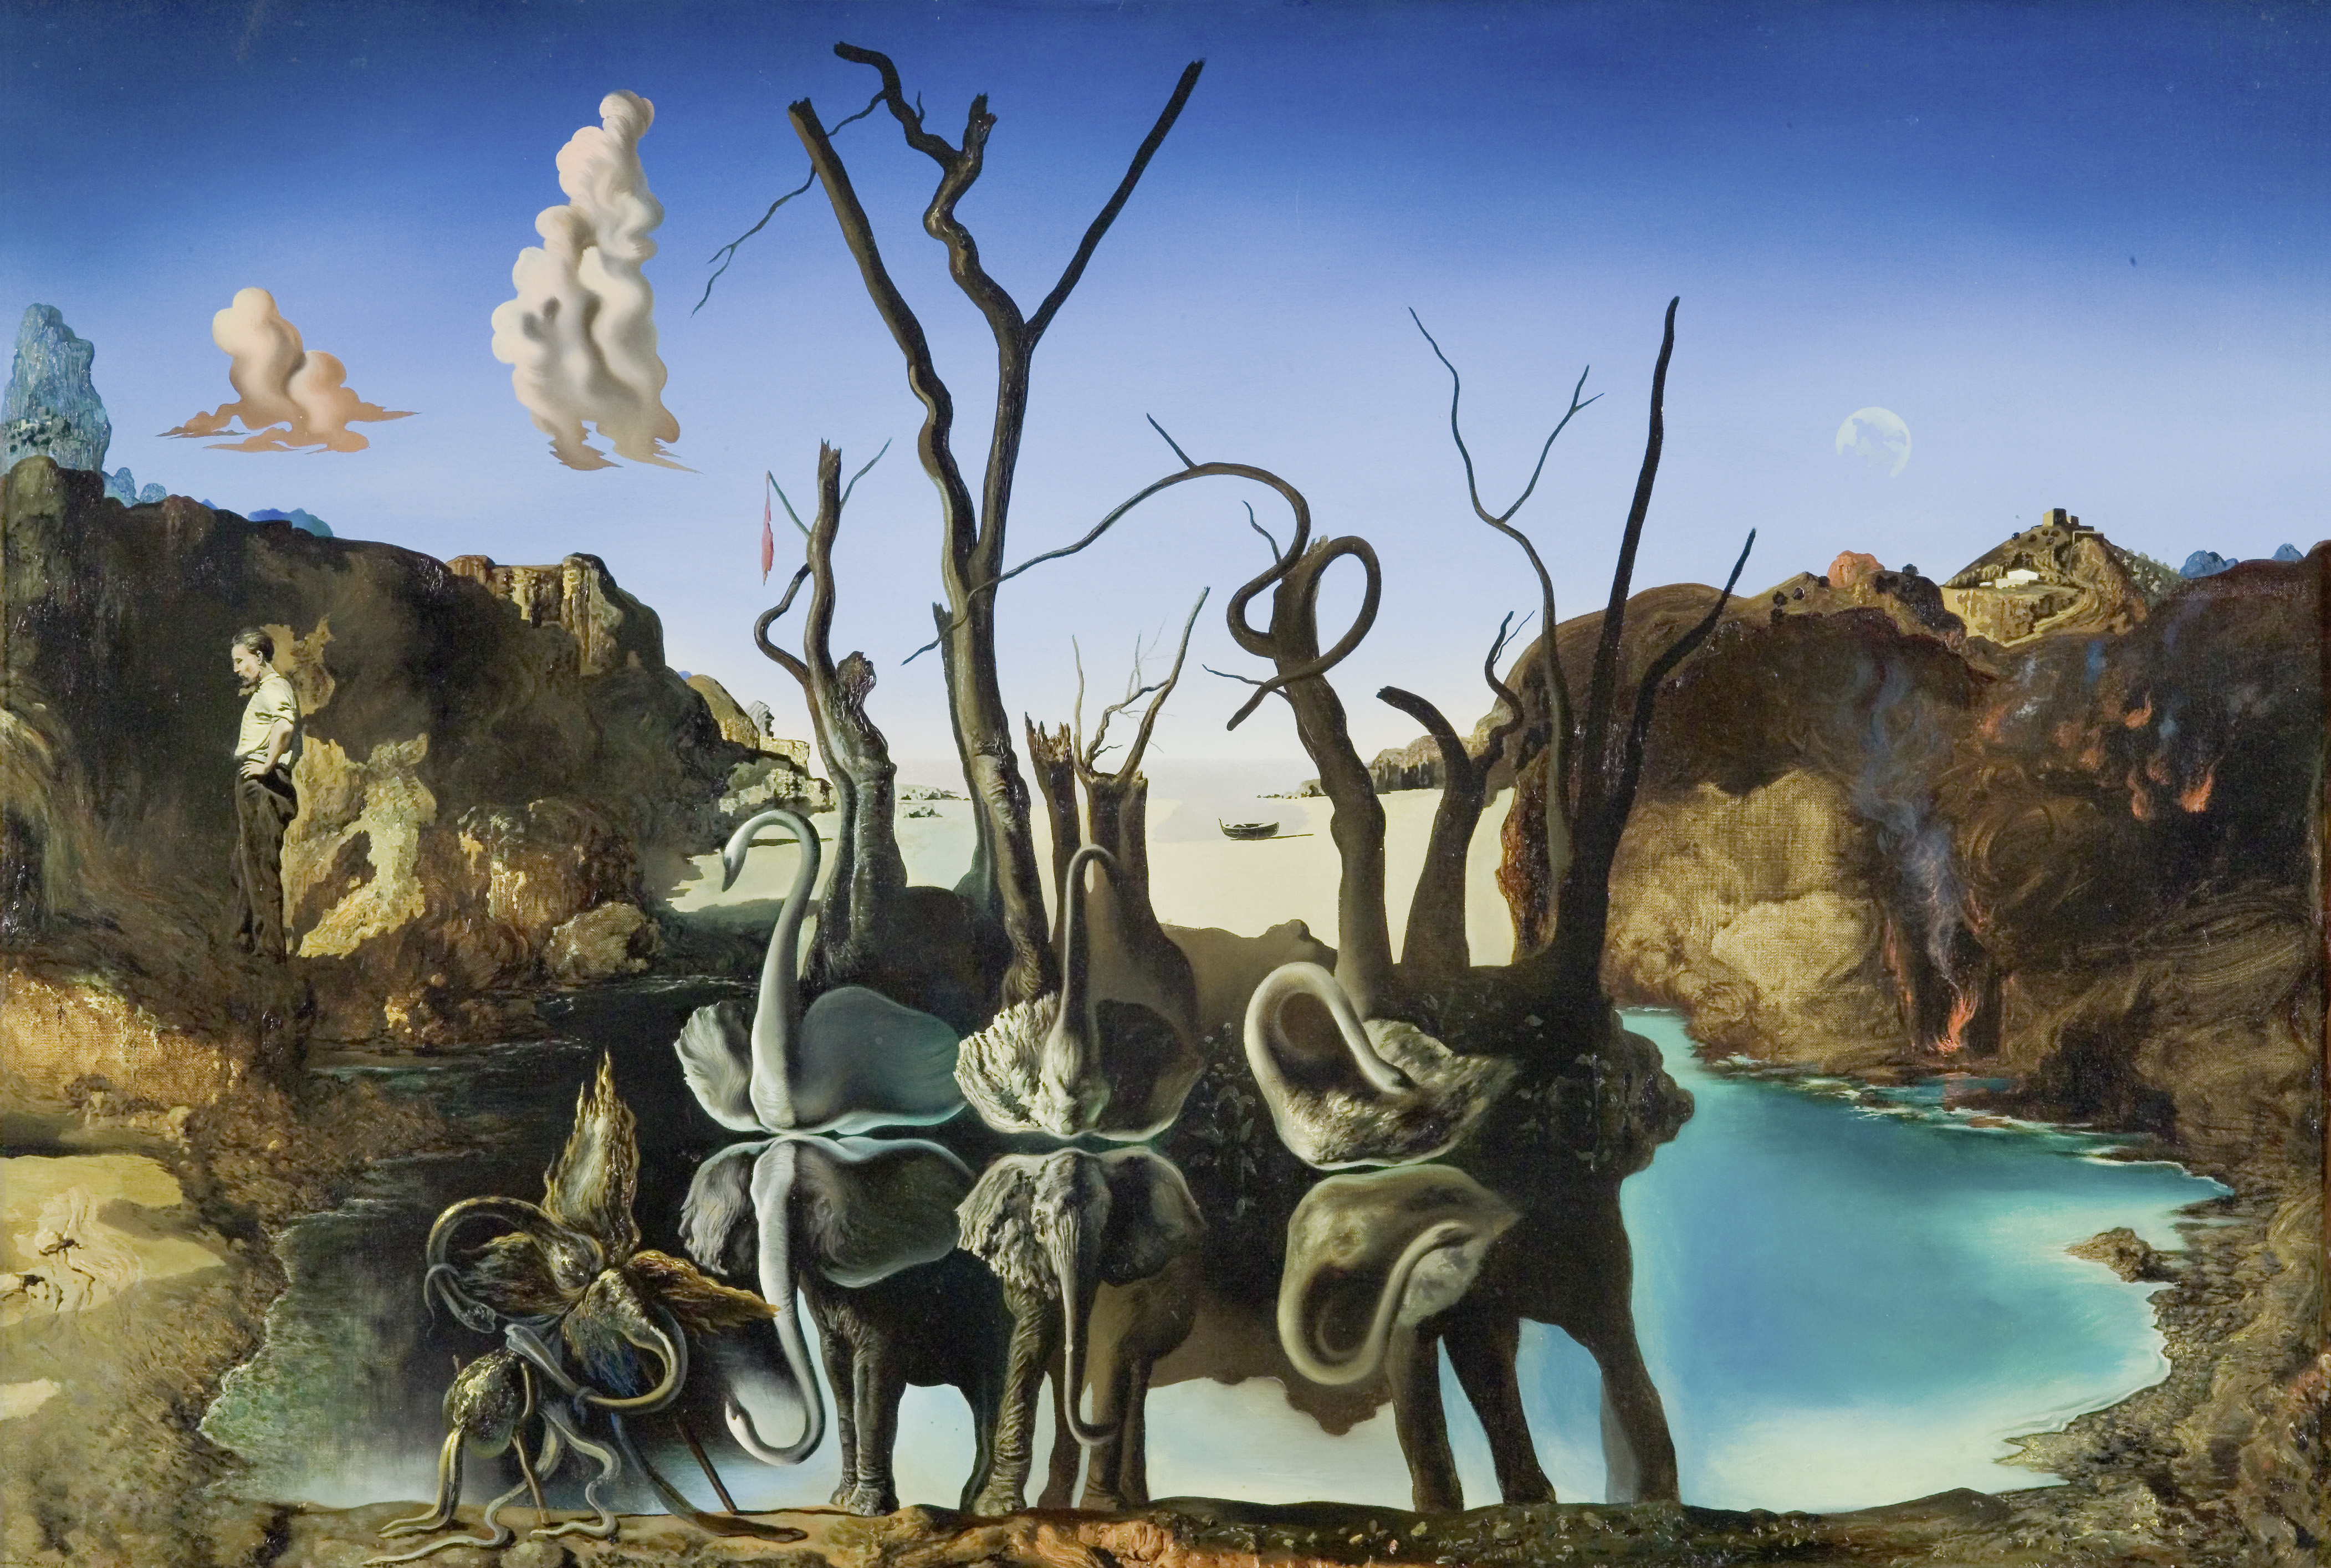 Salvador Dalís Gemälde "Cygnes reflétant des éléphants"